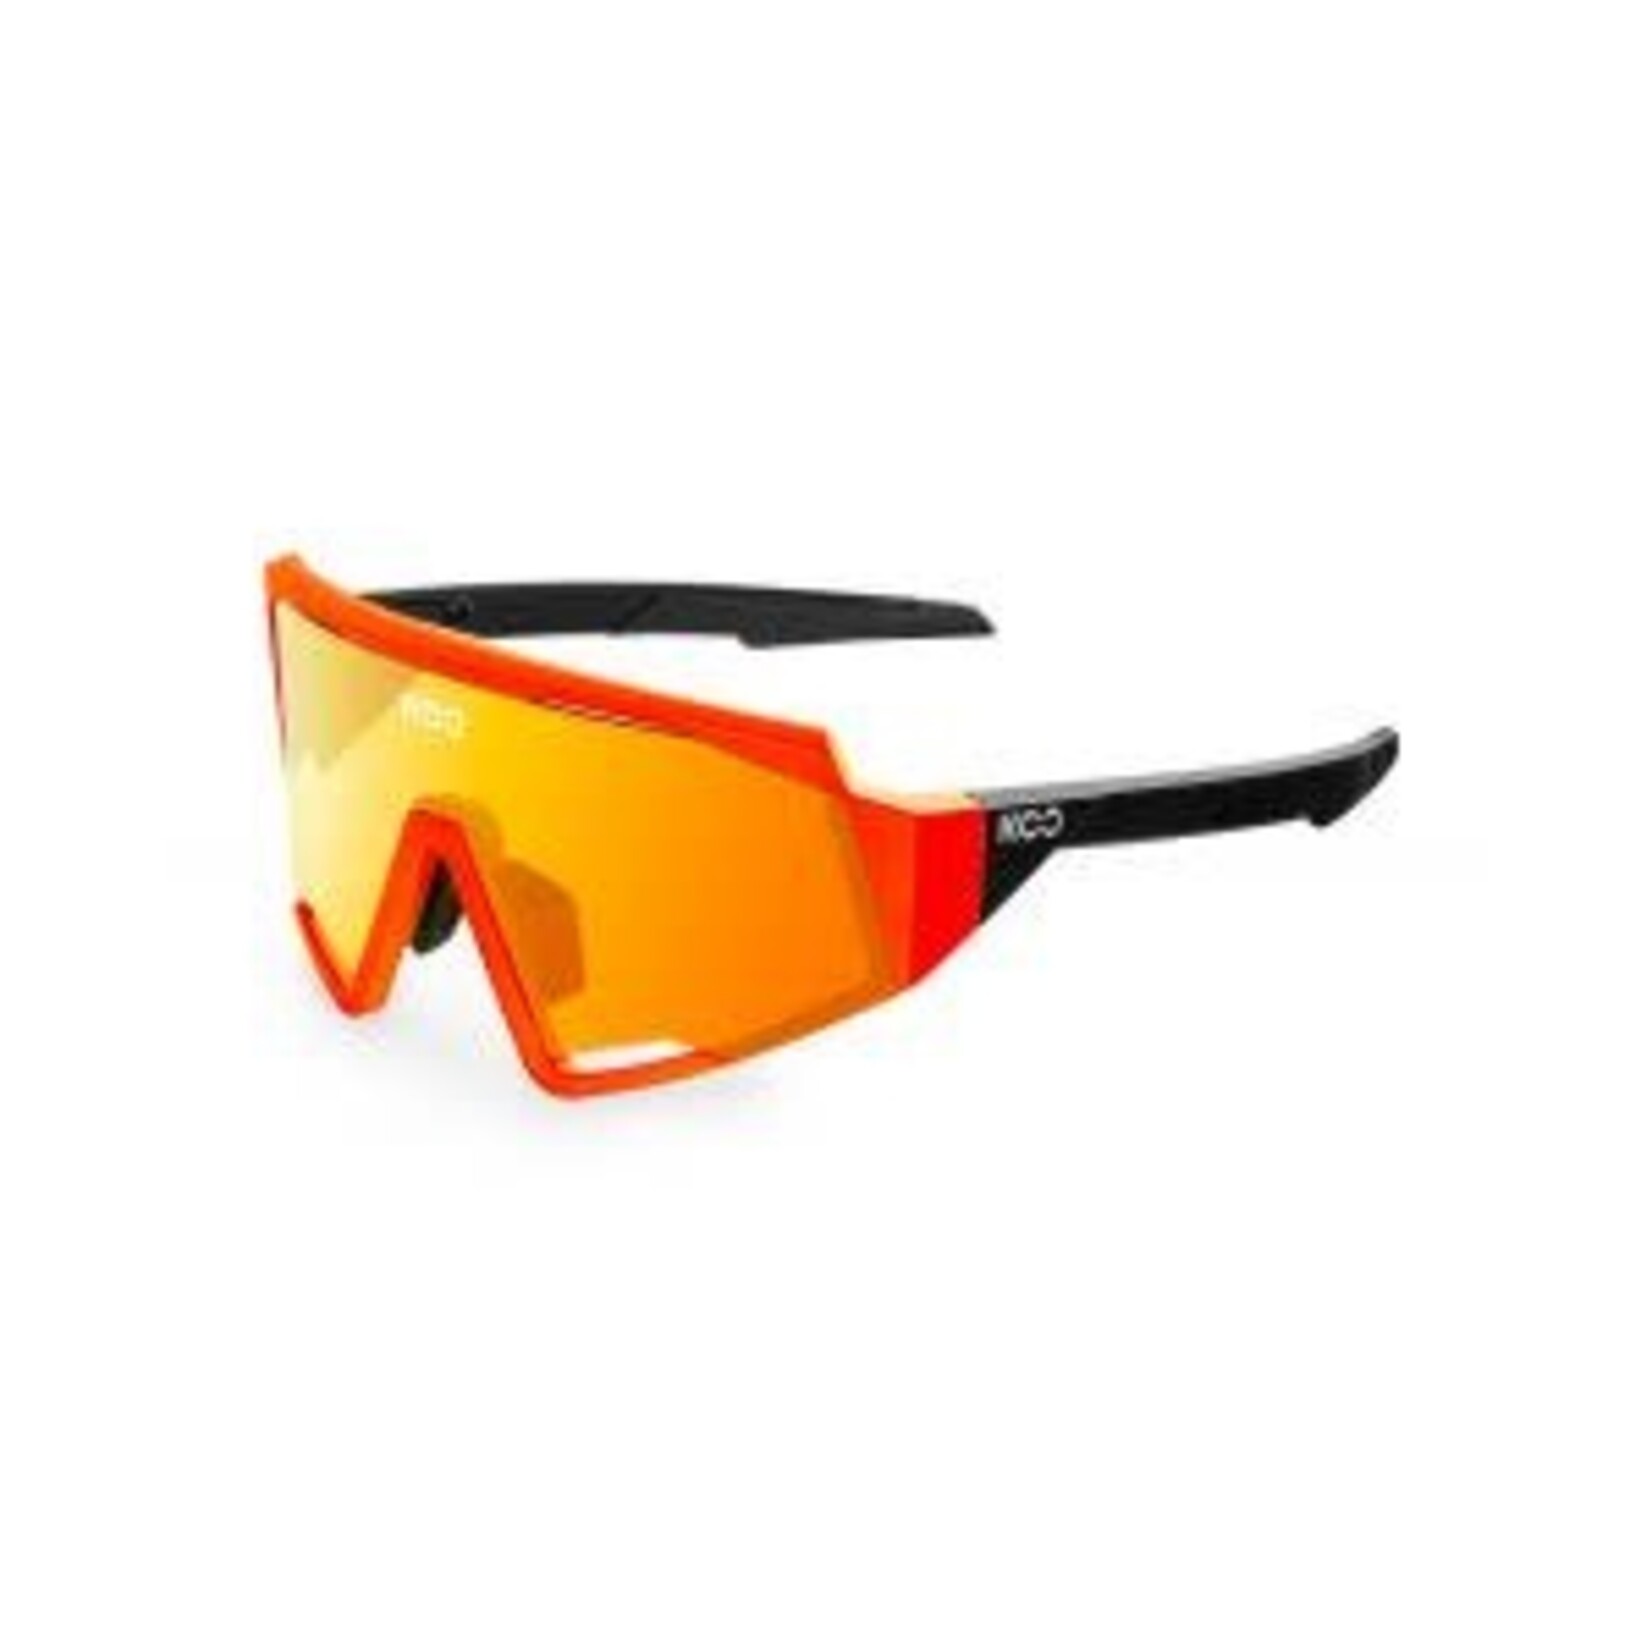 KOO Koo Spectro Performance Cycling Sunglasses